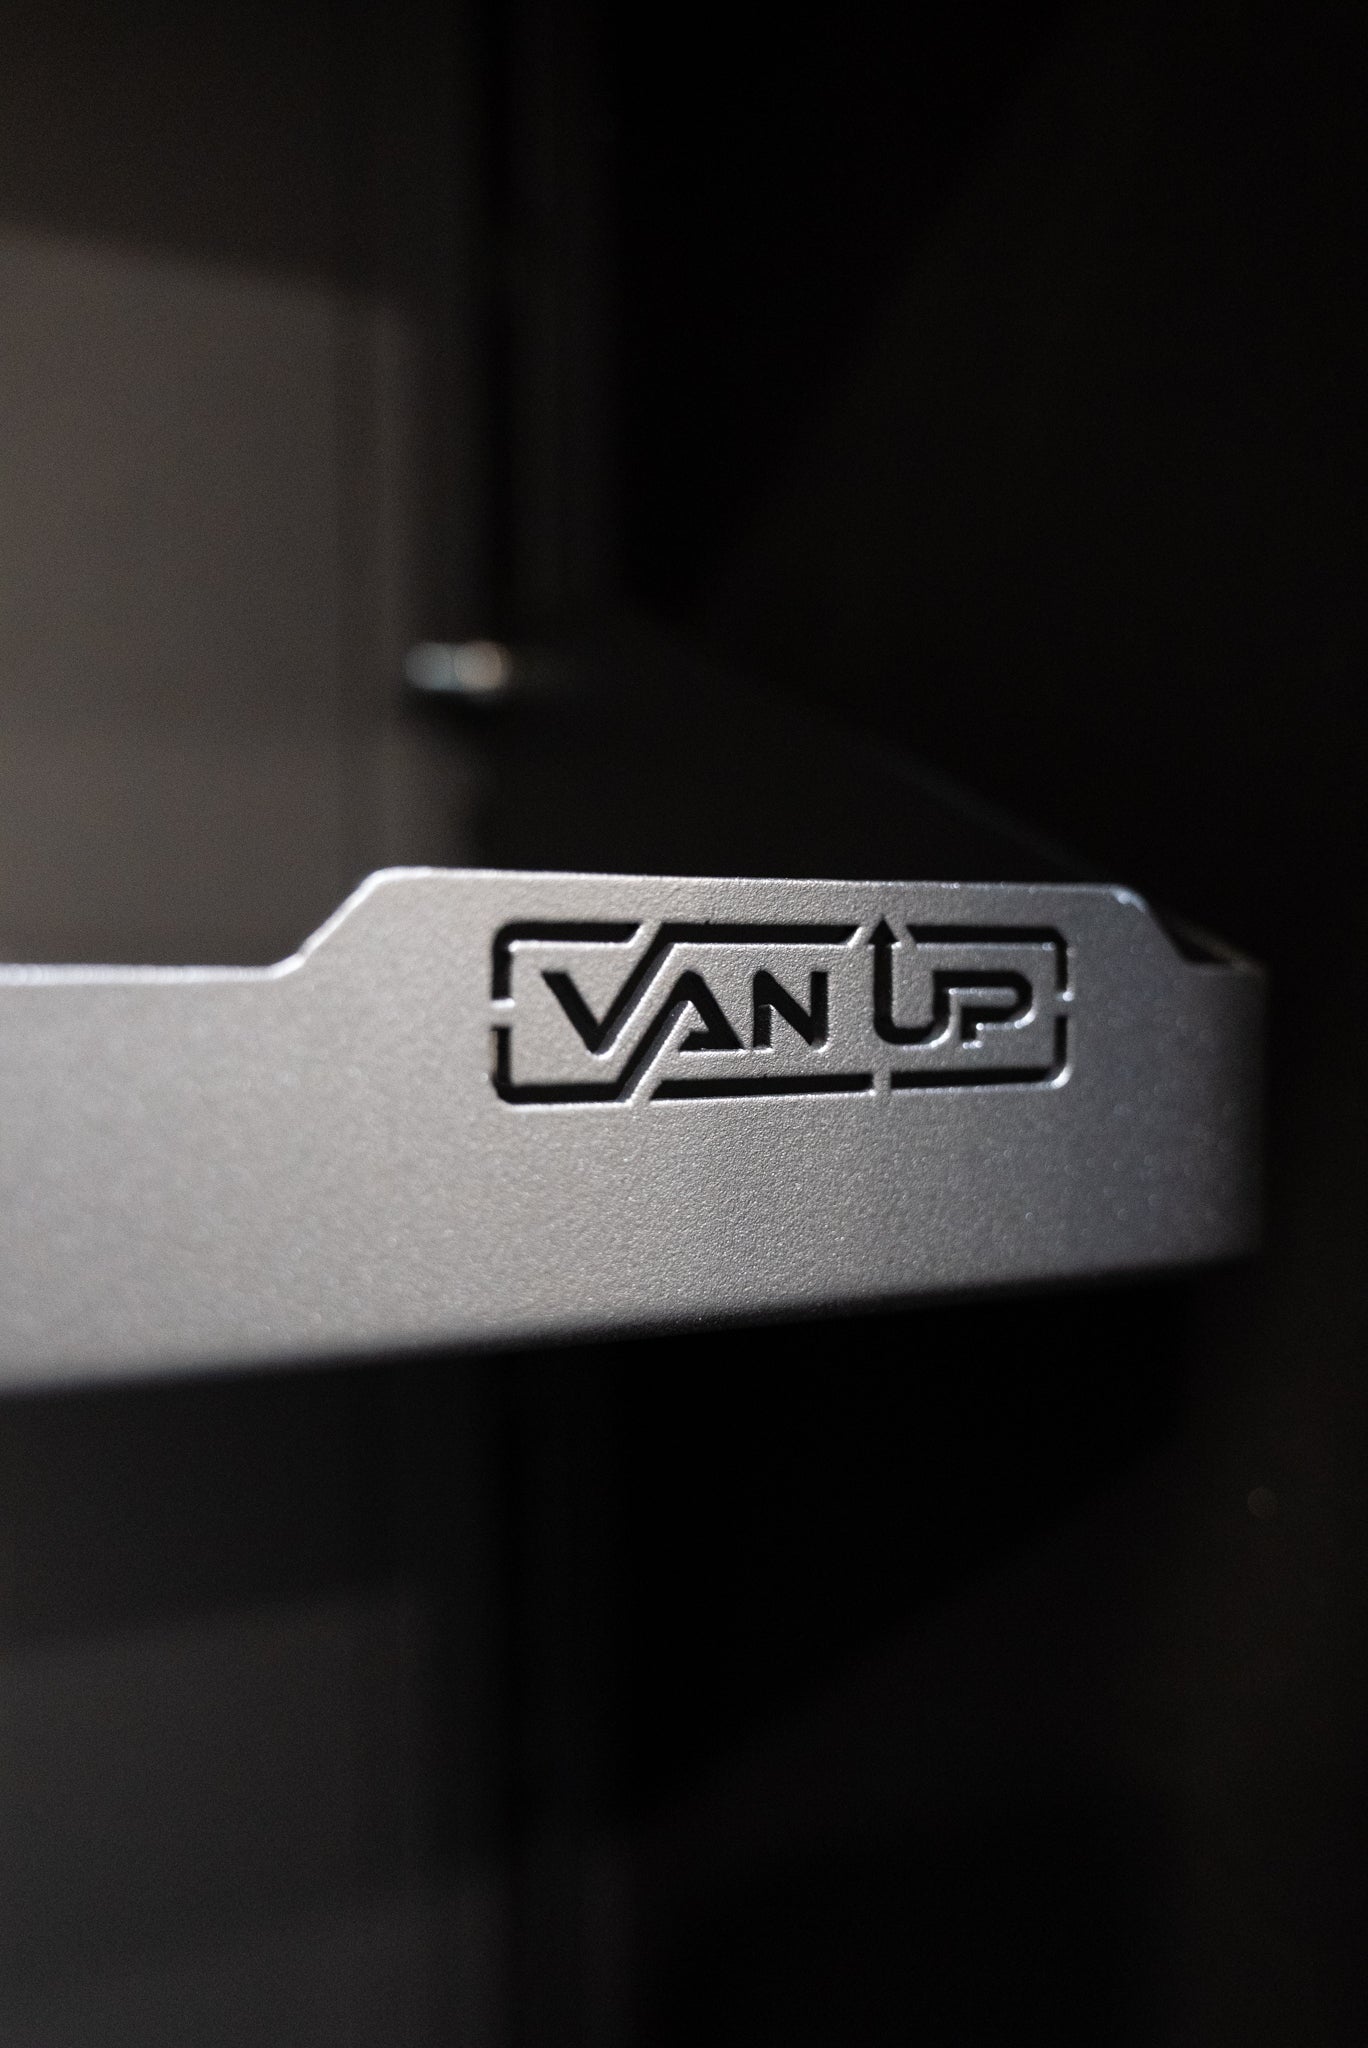 VanUp Box 28" x 21" x 15" (ProMaster)